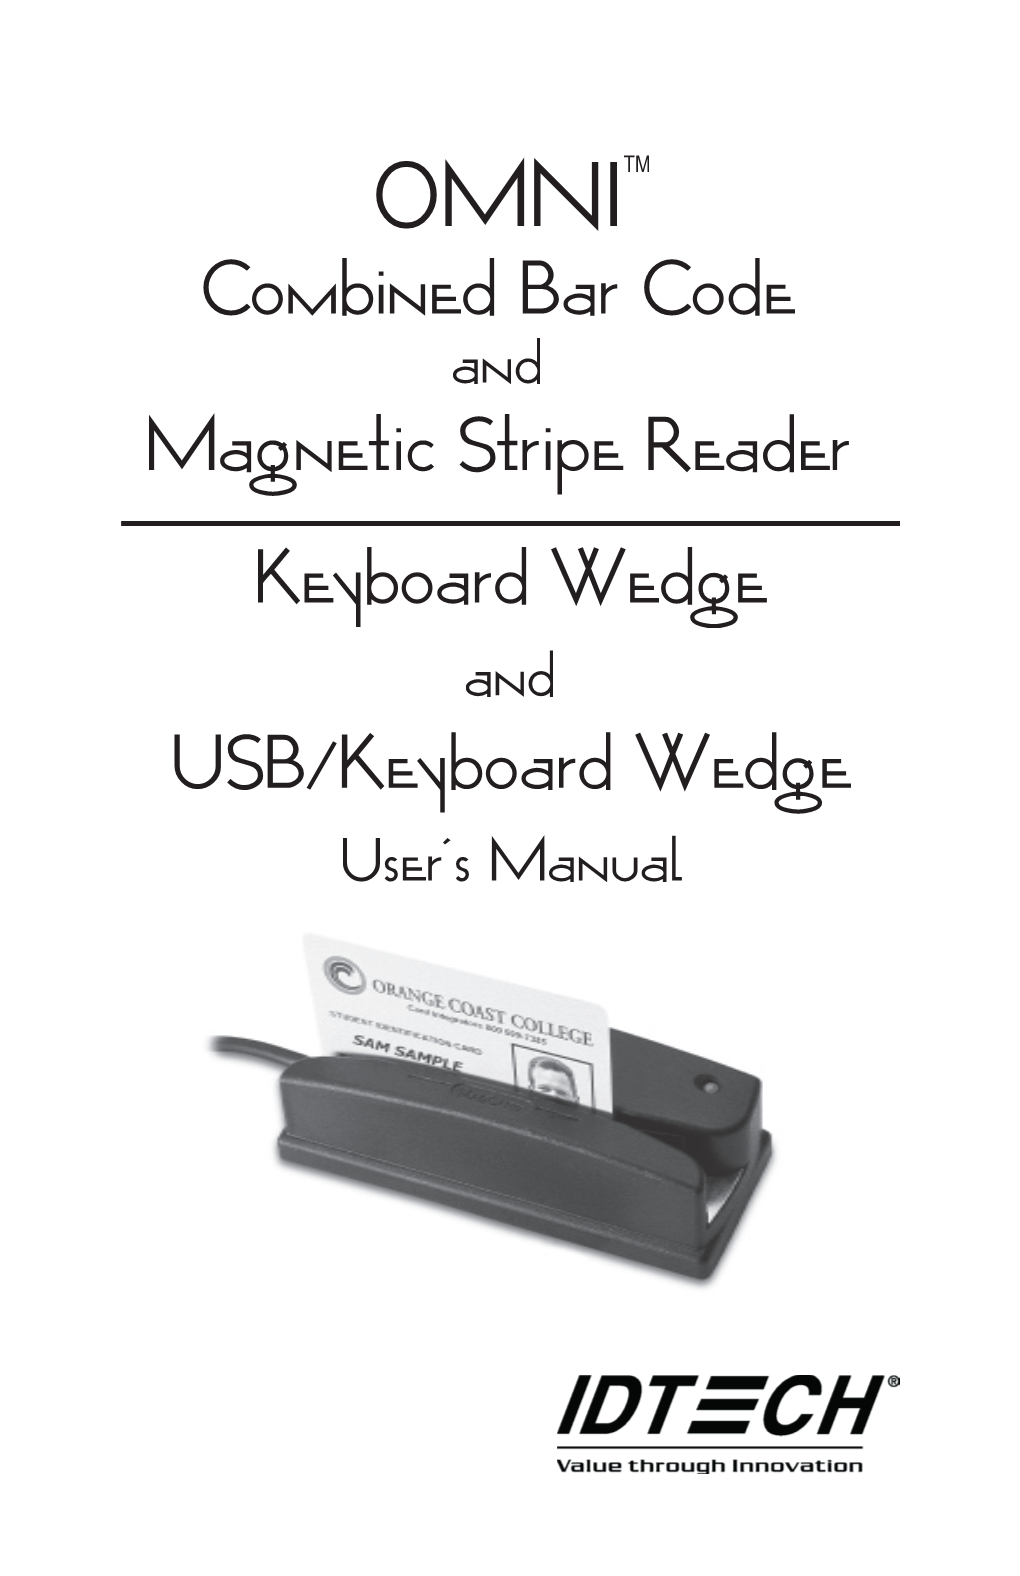 Omni Wedge Users Manual #409 0508.Indd